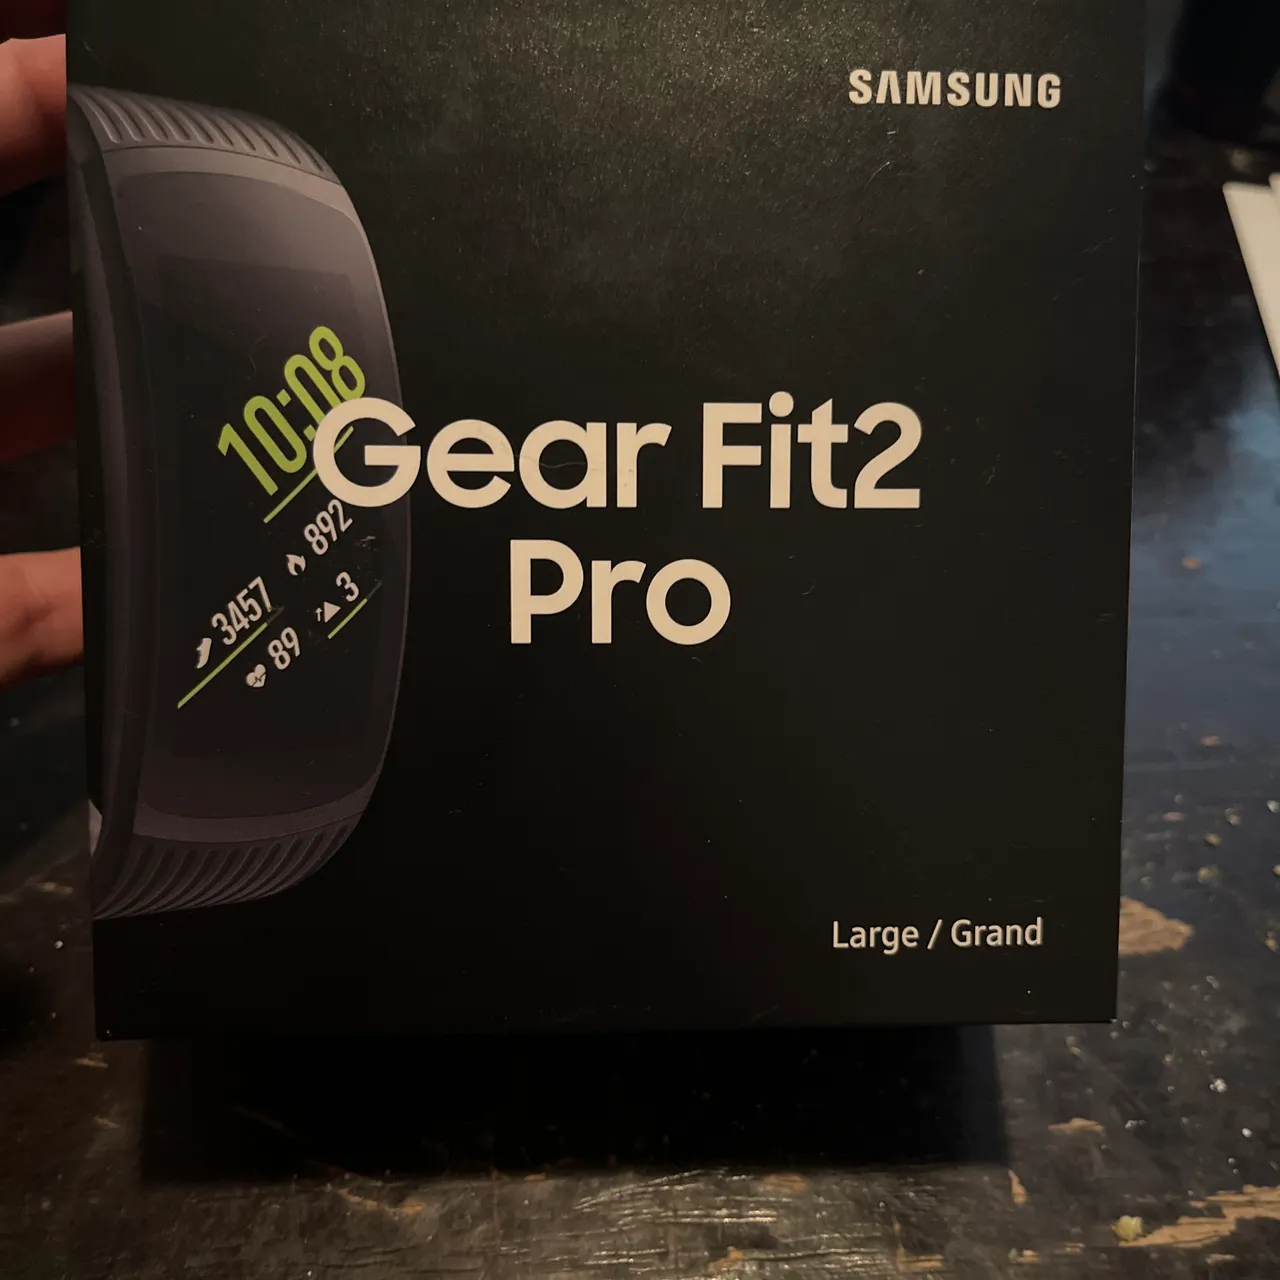 Samsung Gear Fit2 Pro photo 1